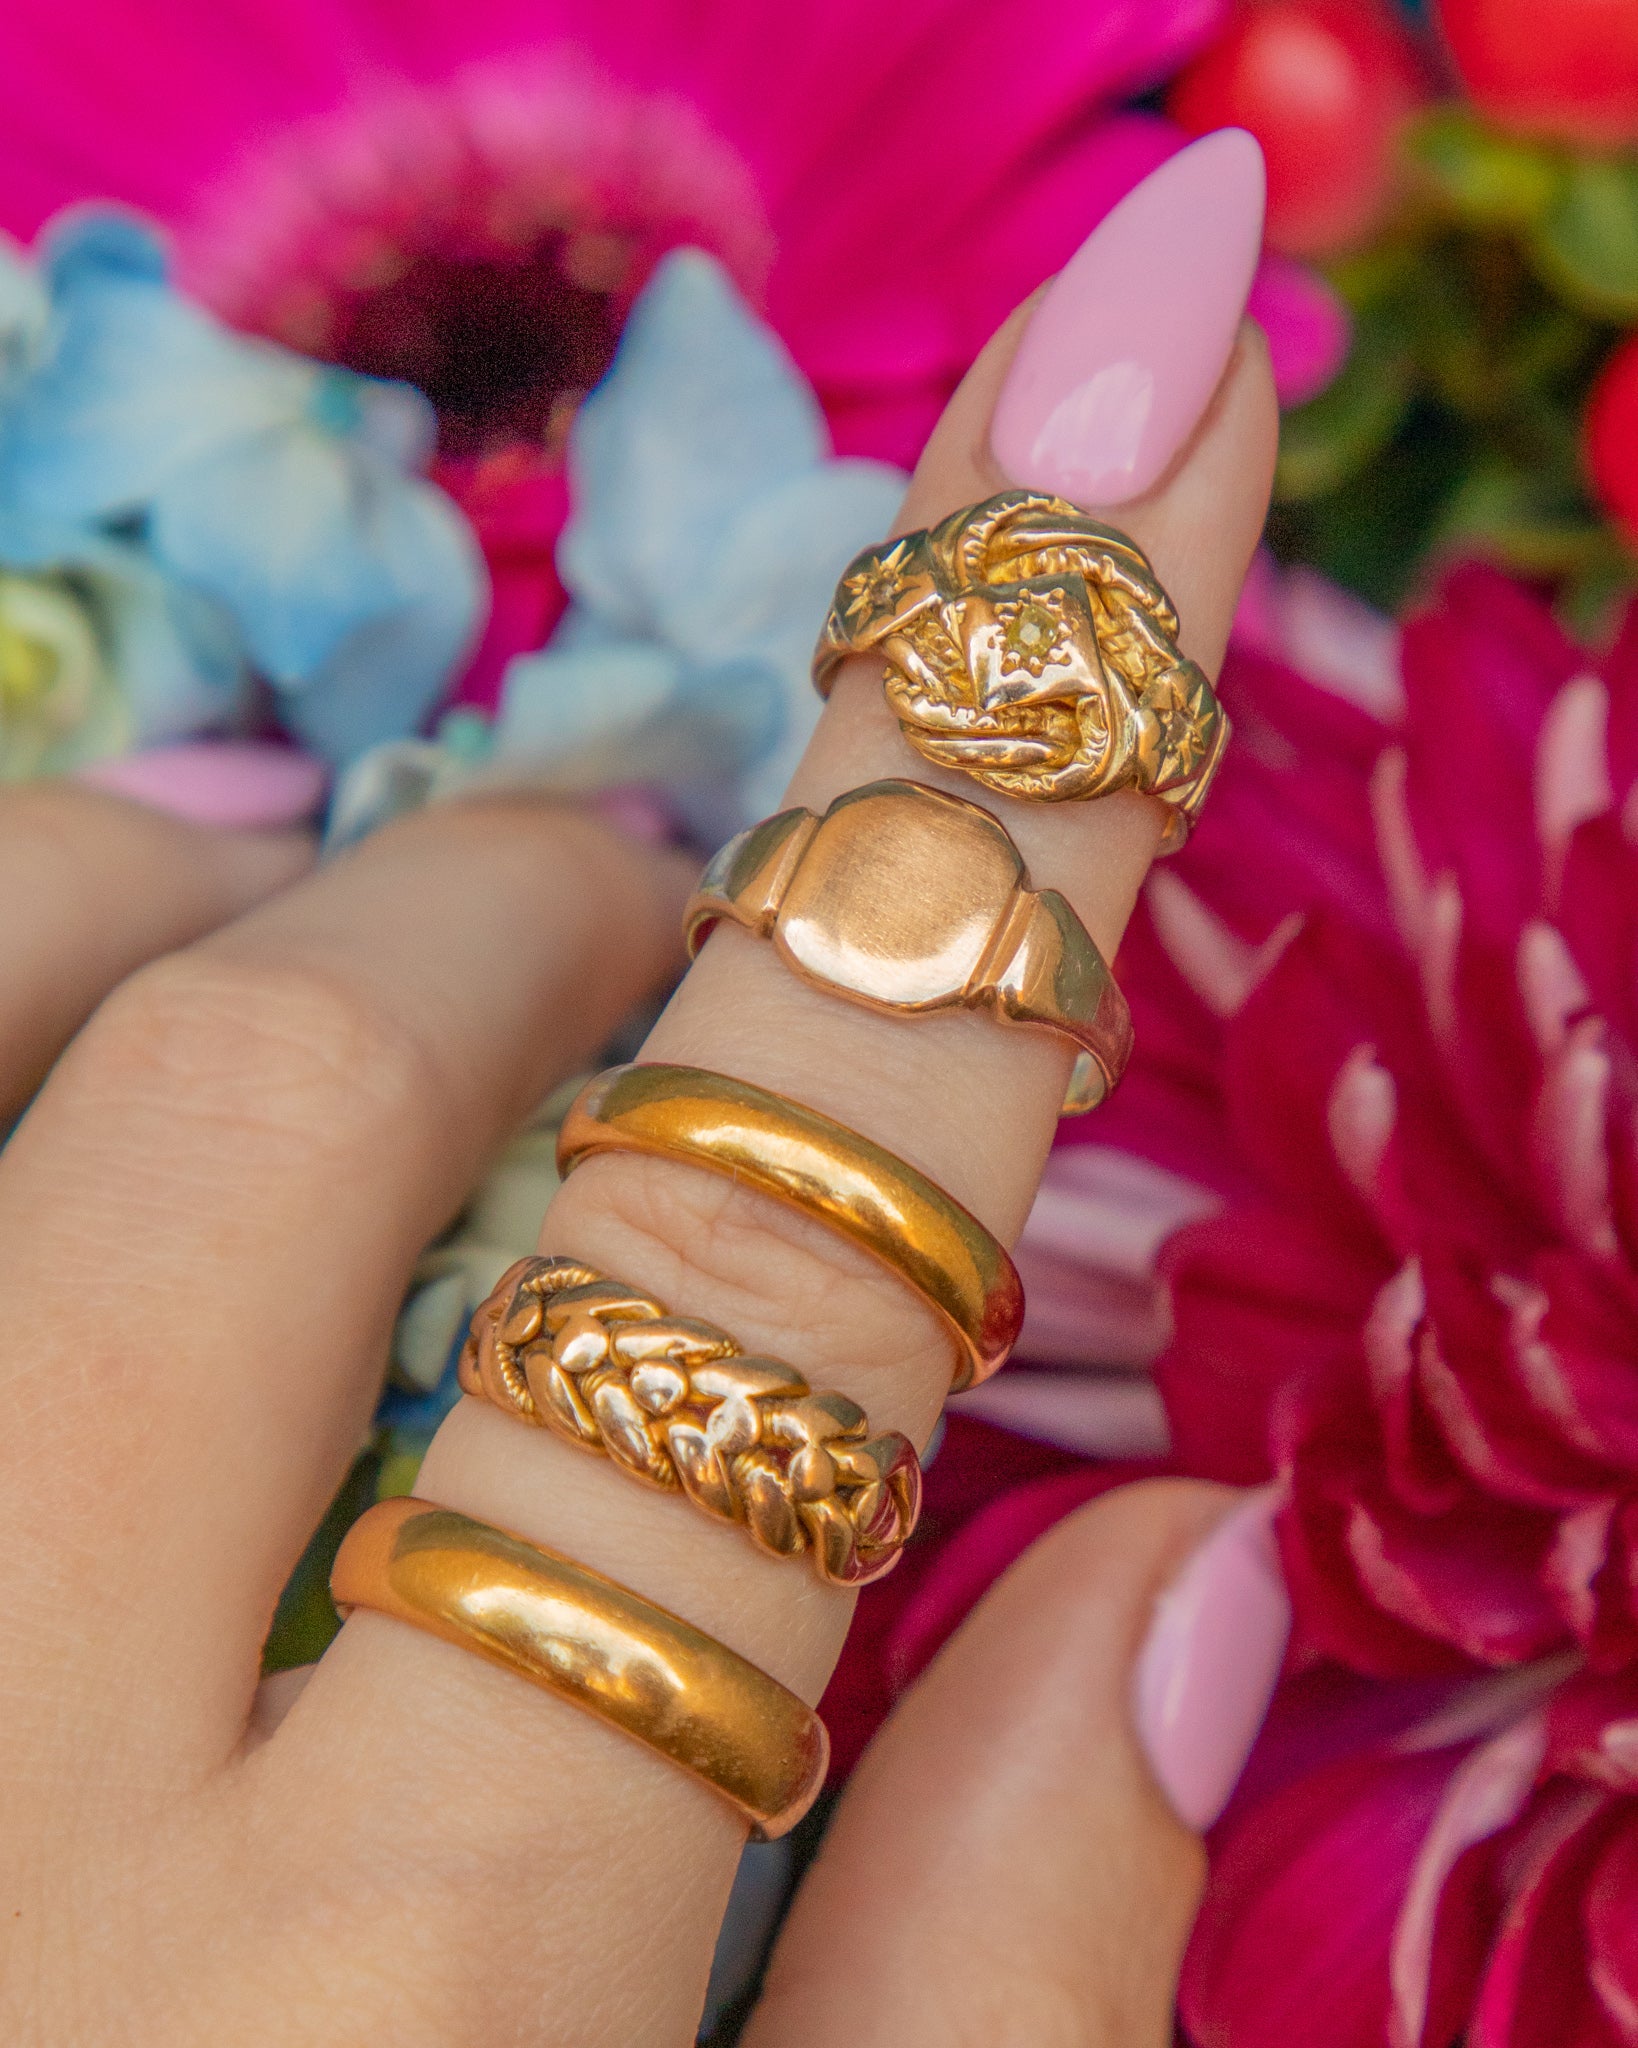 Lover's Knot – Antique Jewelry University